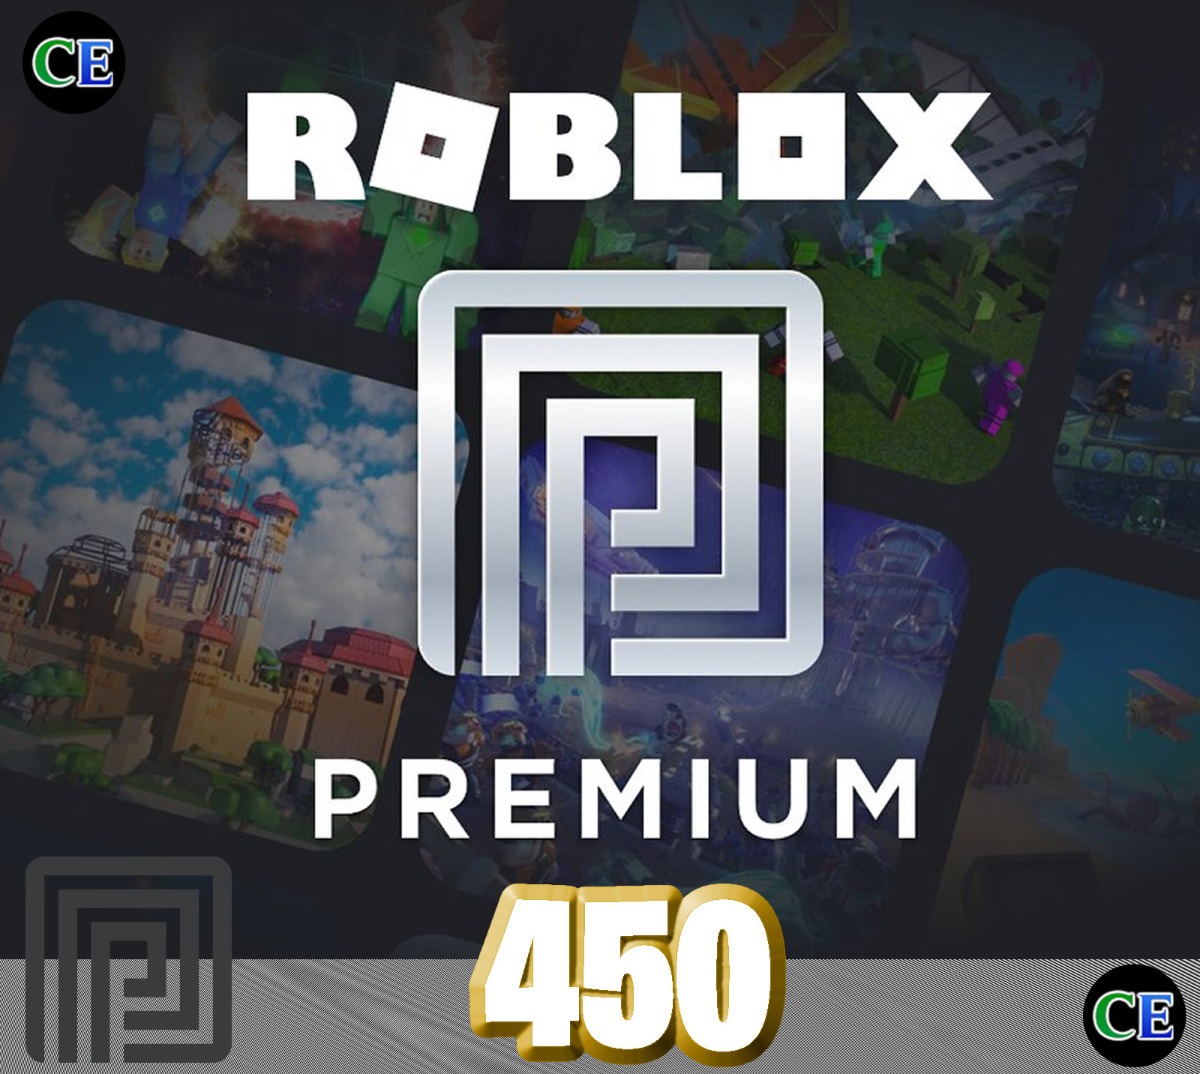 Roblox Premium 450 Robuxmes At Entrega Inmediata - builder club roblox inicio facebook